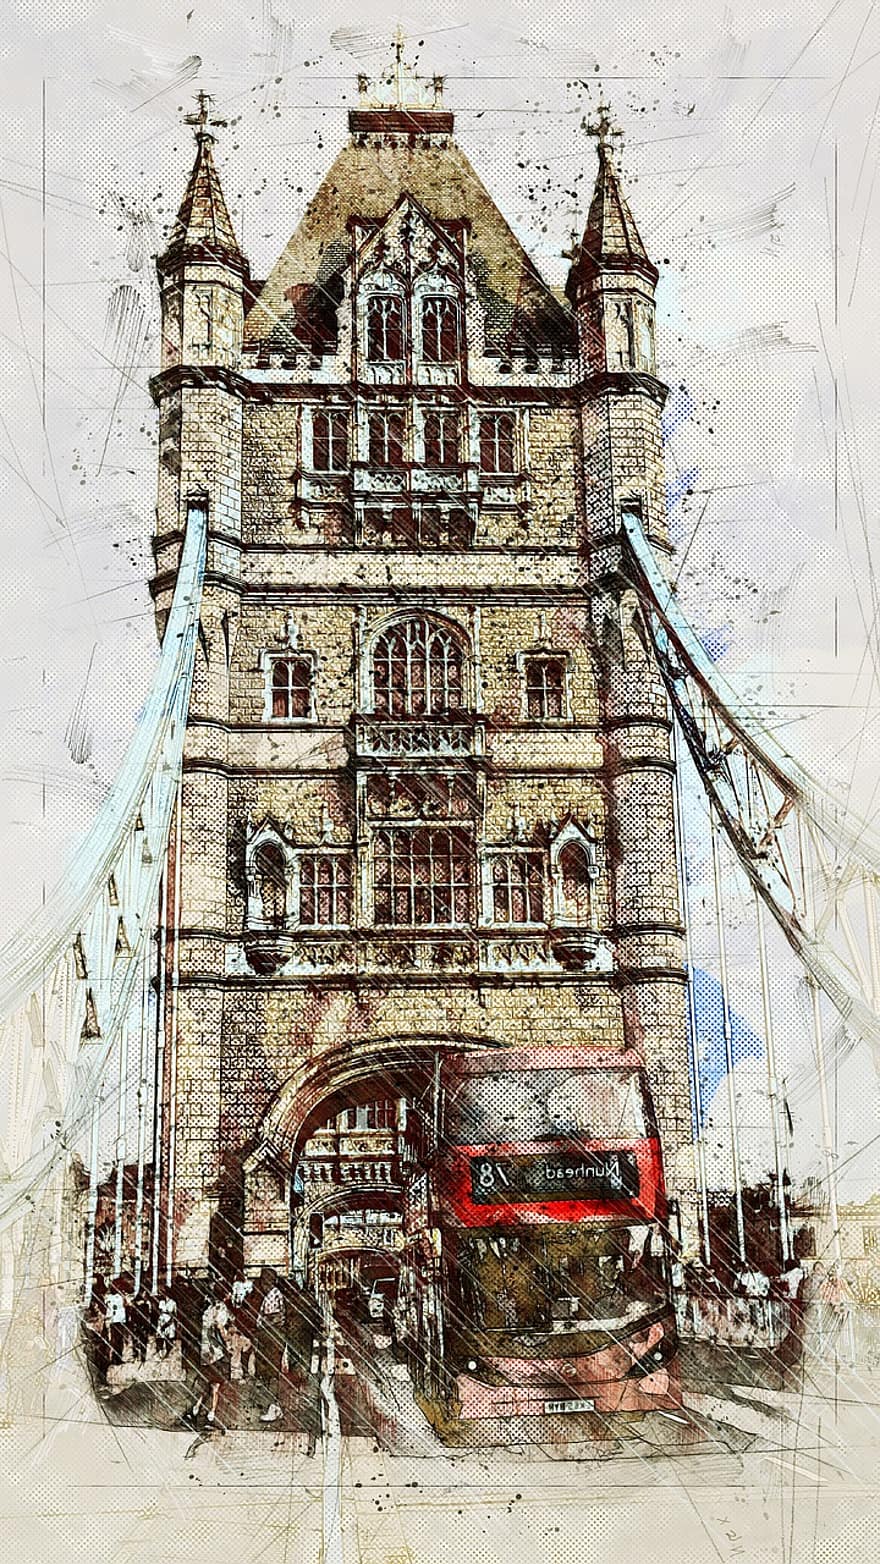 London, Turm, Brücke, rot, Bus, Wahrzeichen, Stadt, England, Hauptstadt, Themse, Fluss